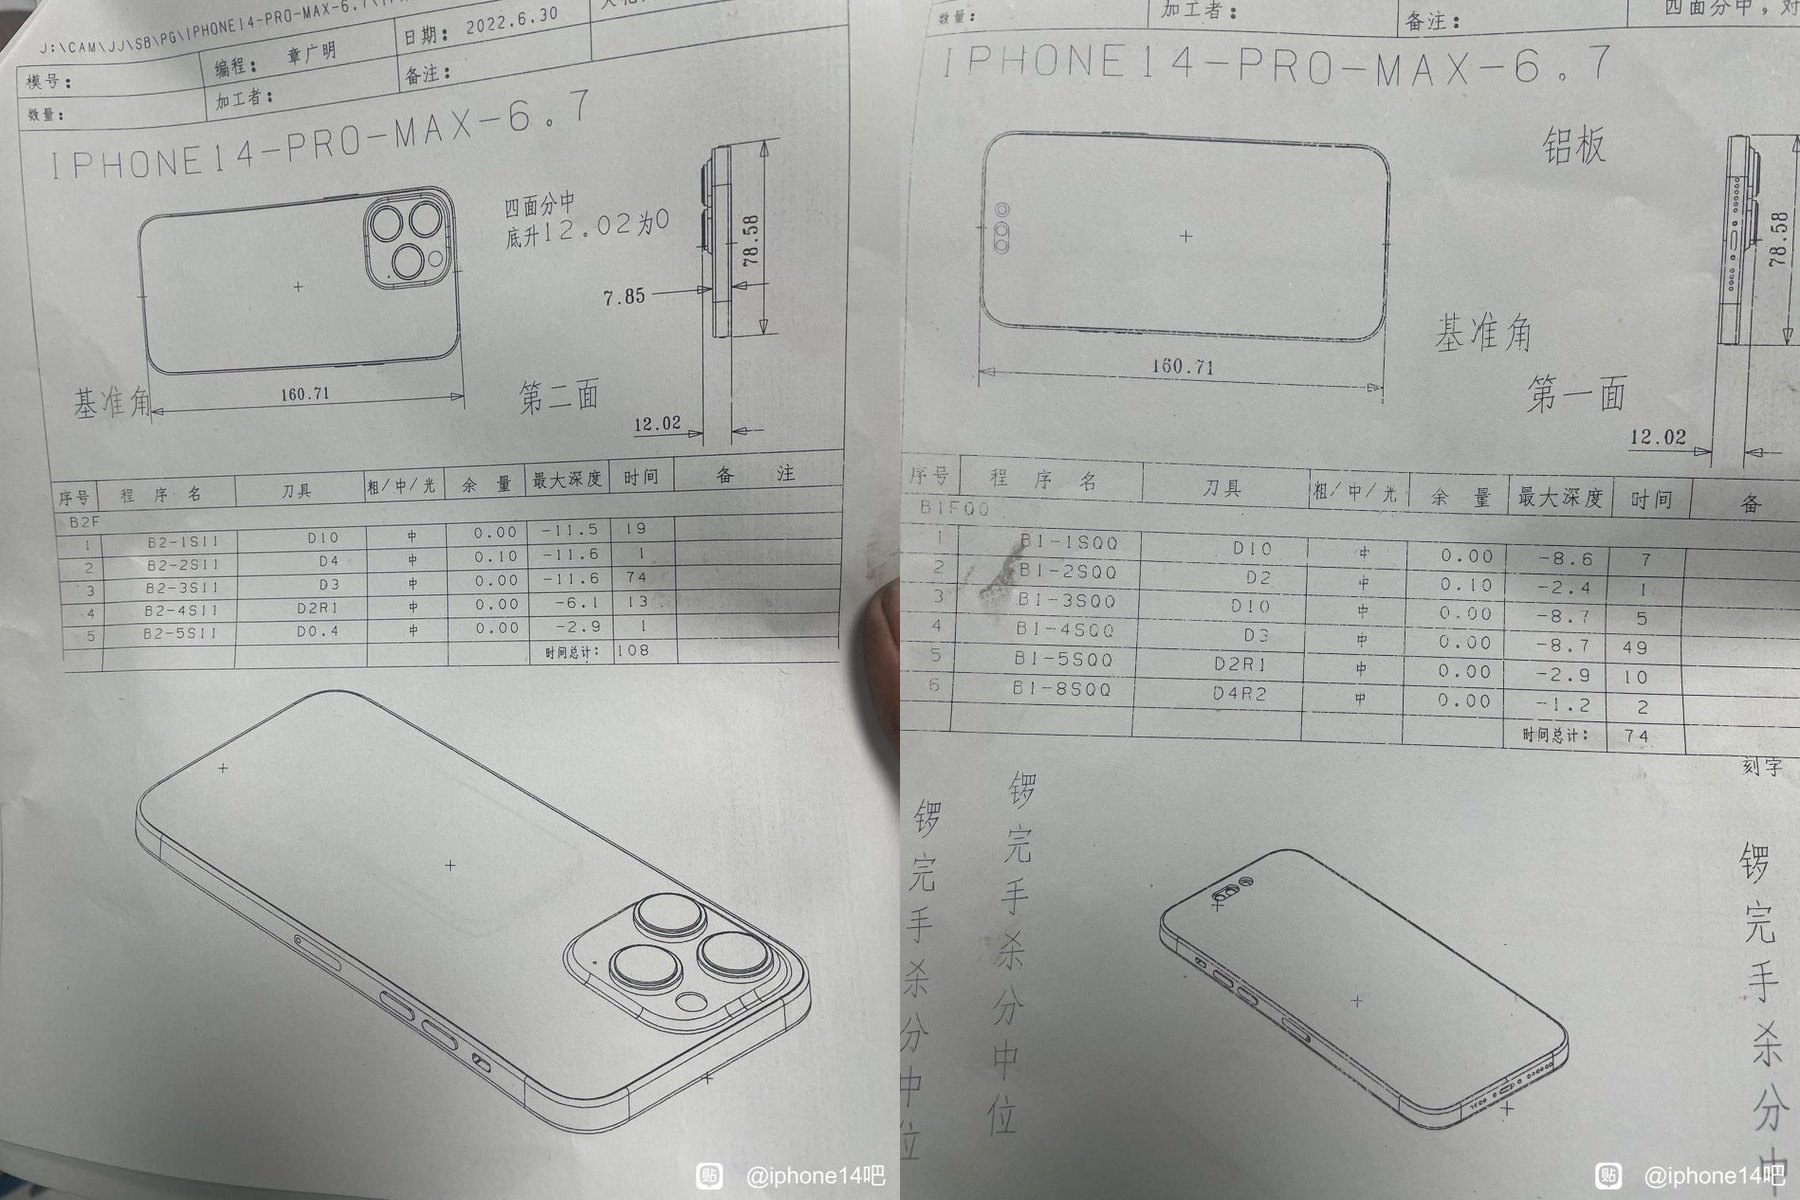 iPhone 14 Pro Max design leaked